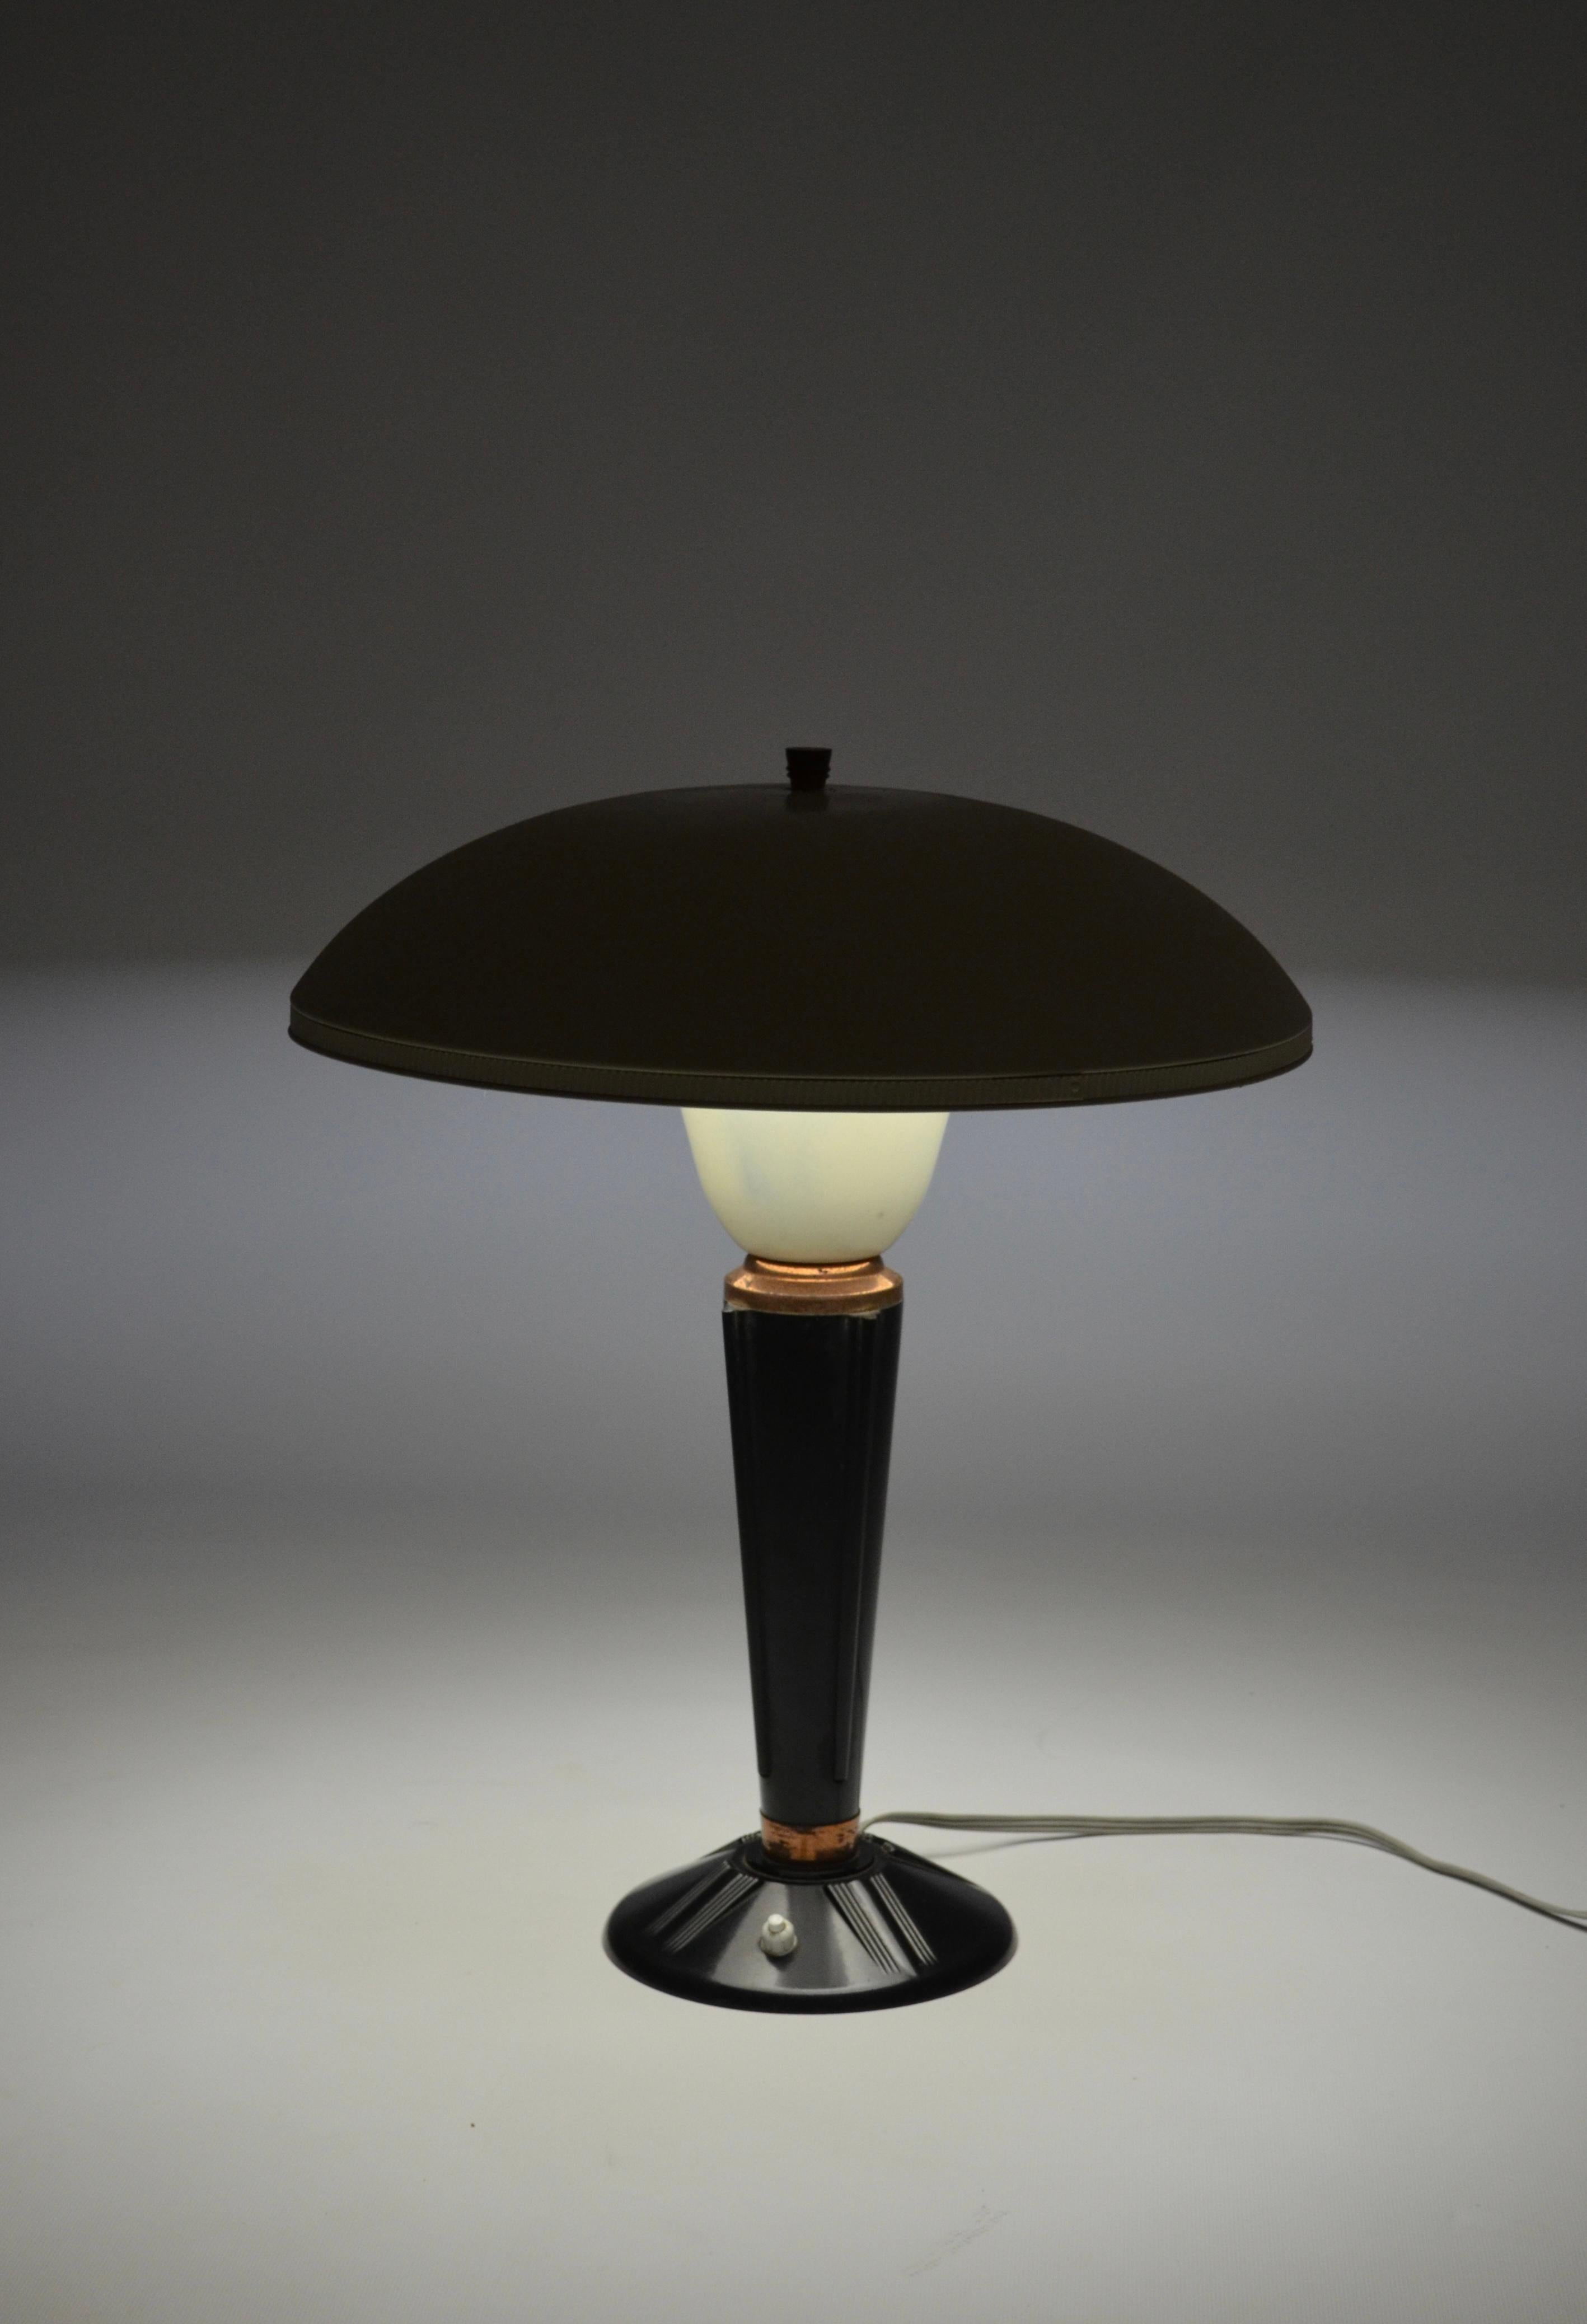 Bakelit-Lampe, Modell 320, Marke Jumo, Frankreich, 1940er Jahre (Metall) im Angebot